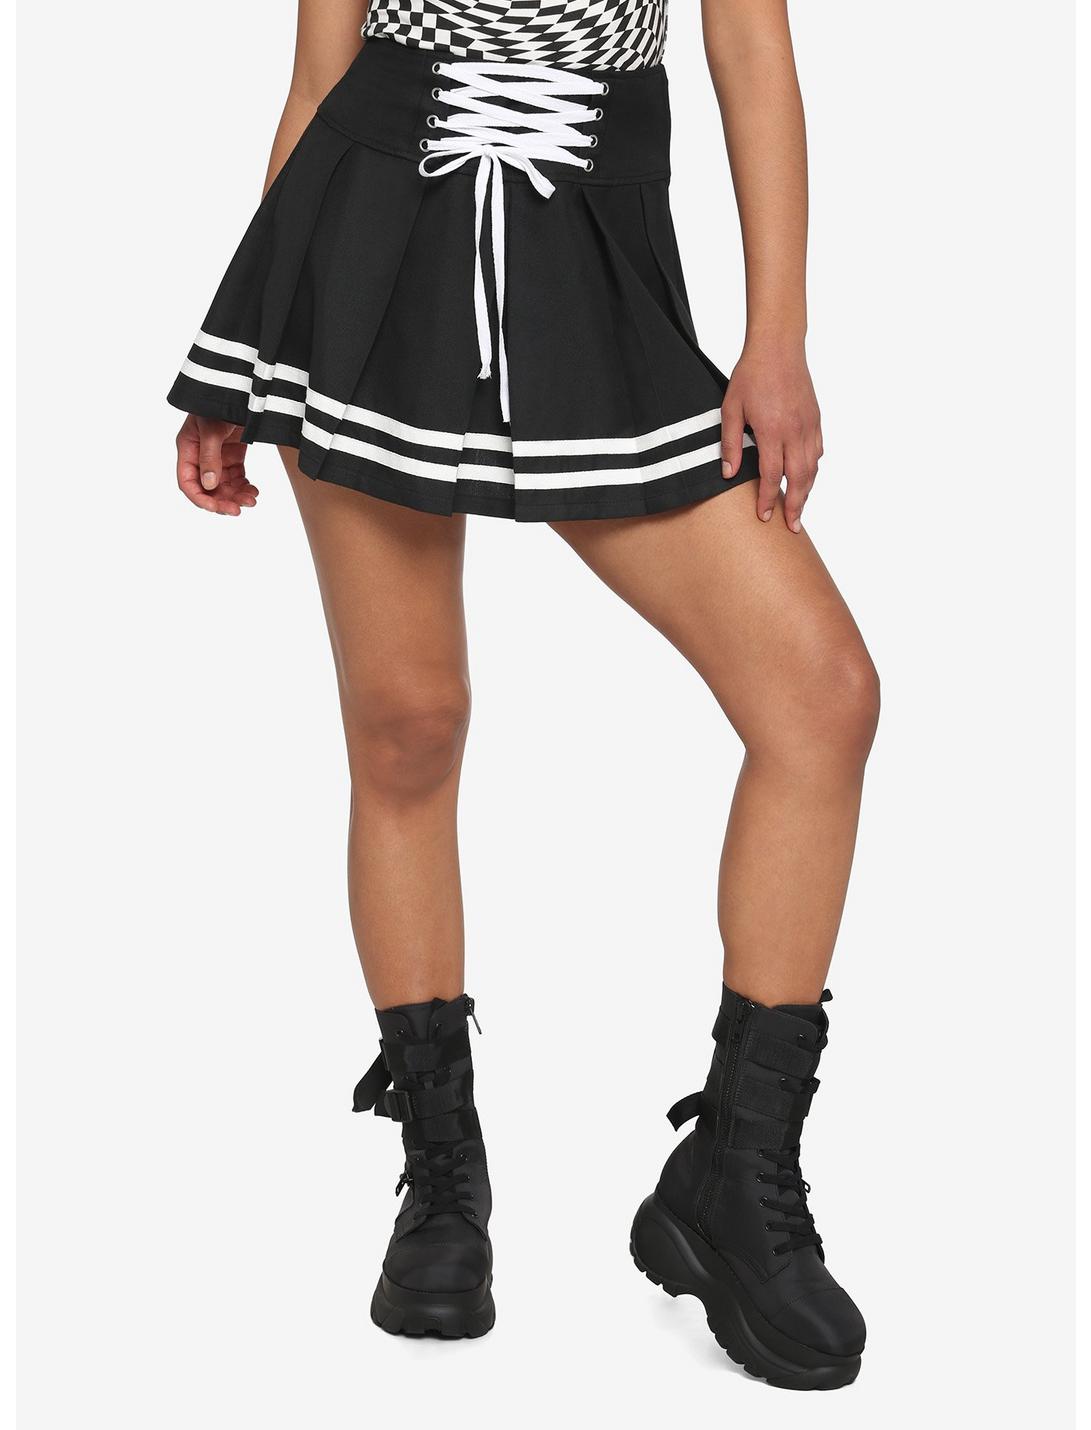 Black & White Lace-Up Pleated Skirt, BLACK, hi-res